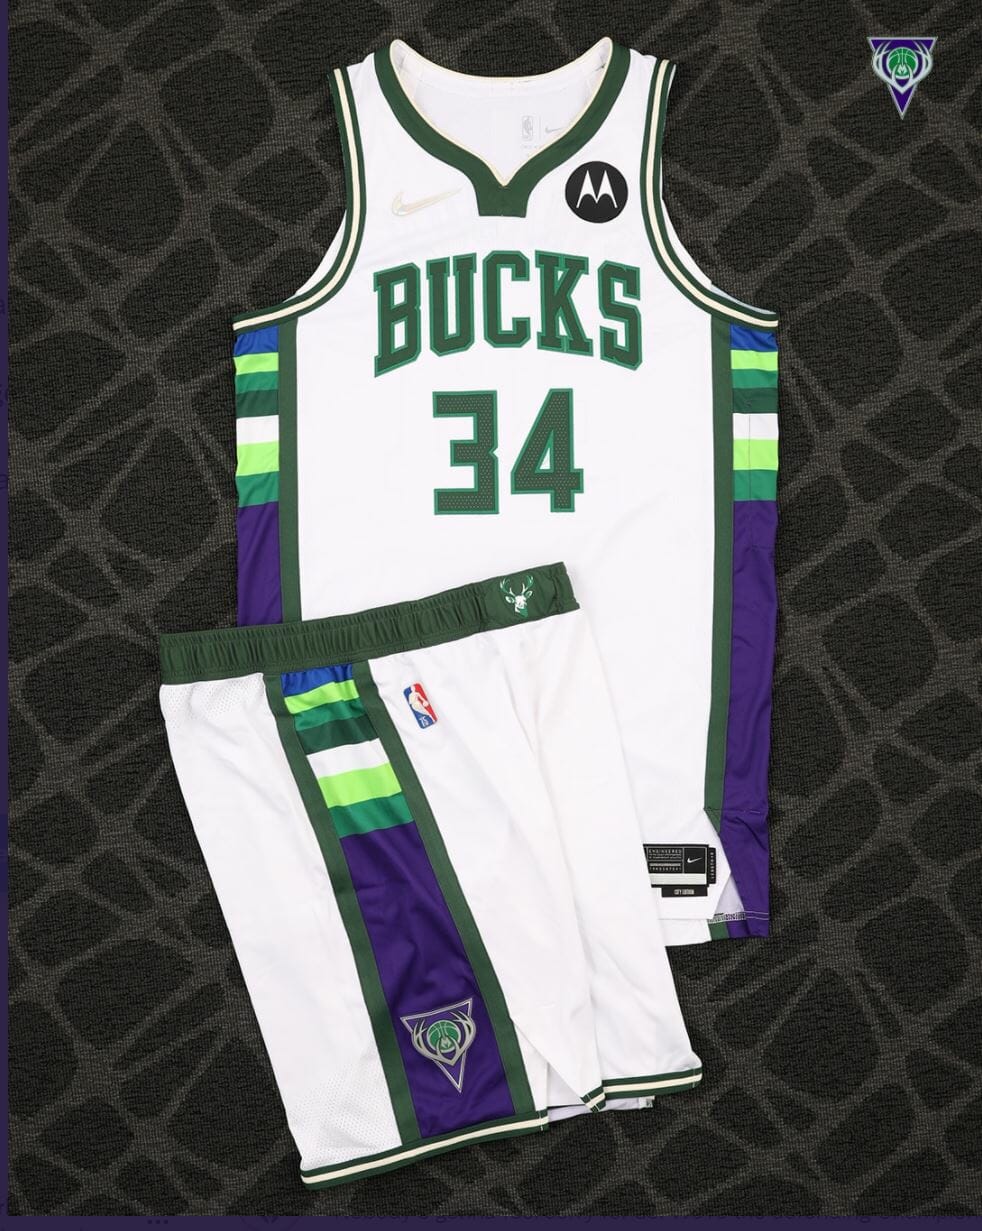 Bucks unveil new 'Cream City' uniforms inspired by Milwaukee bricks 